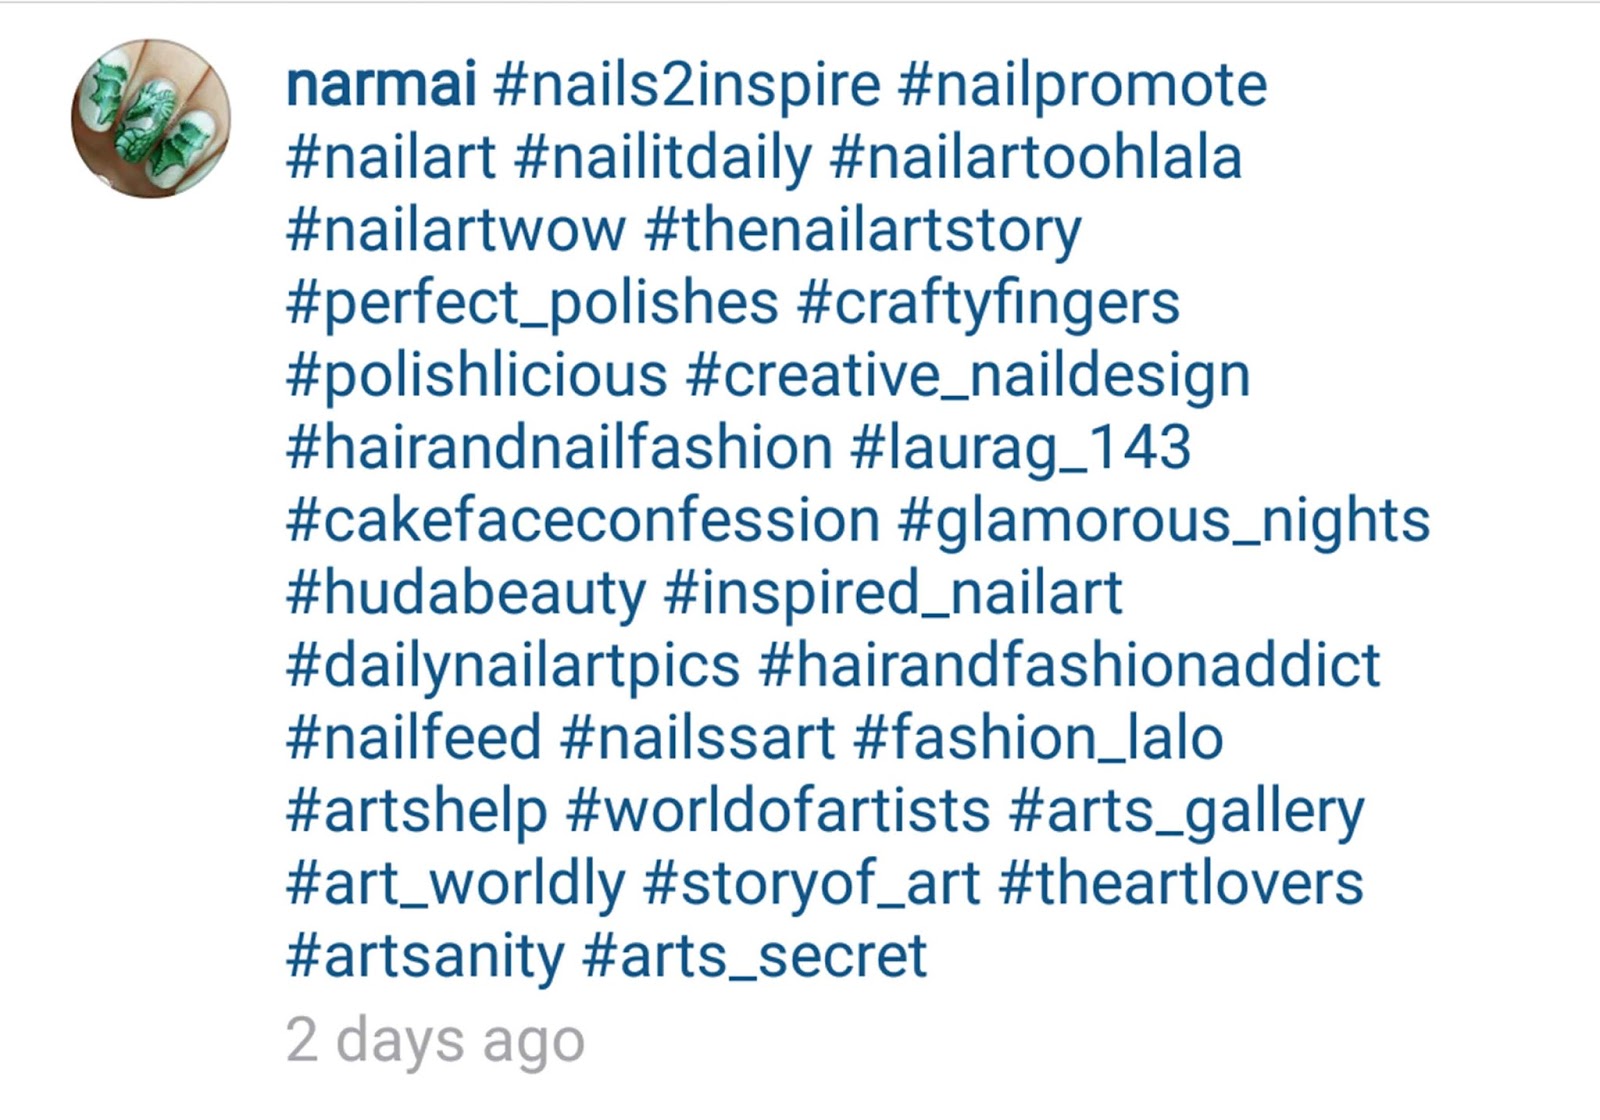 10. Nail Art Supplies Australia Instagram Hashtags - wide 8